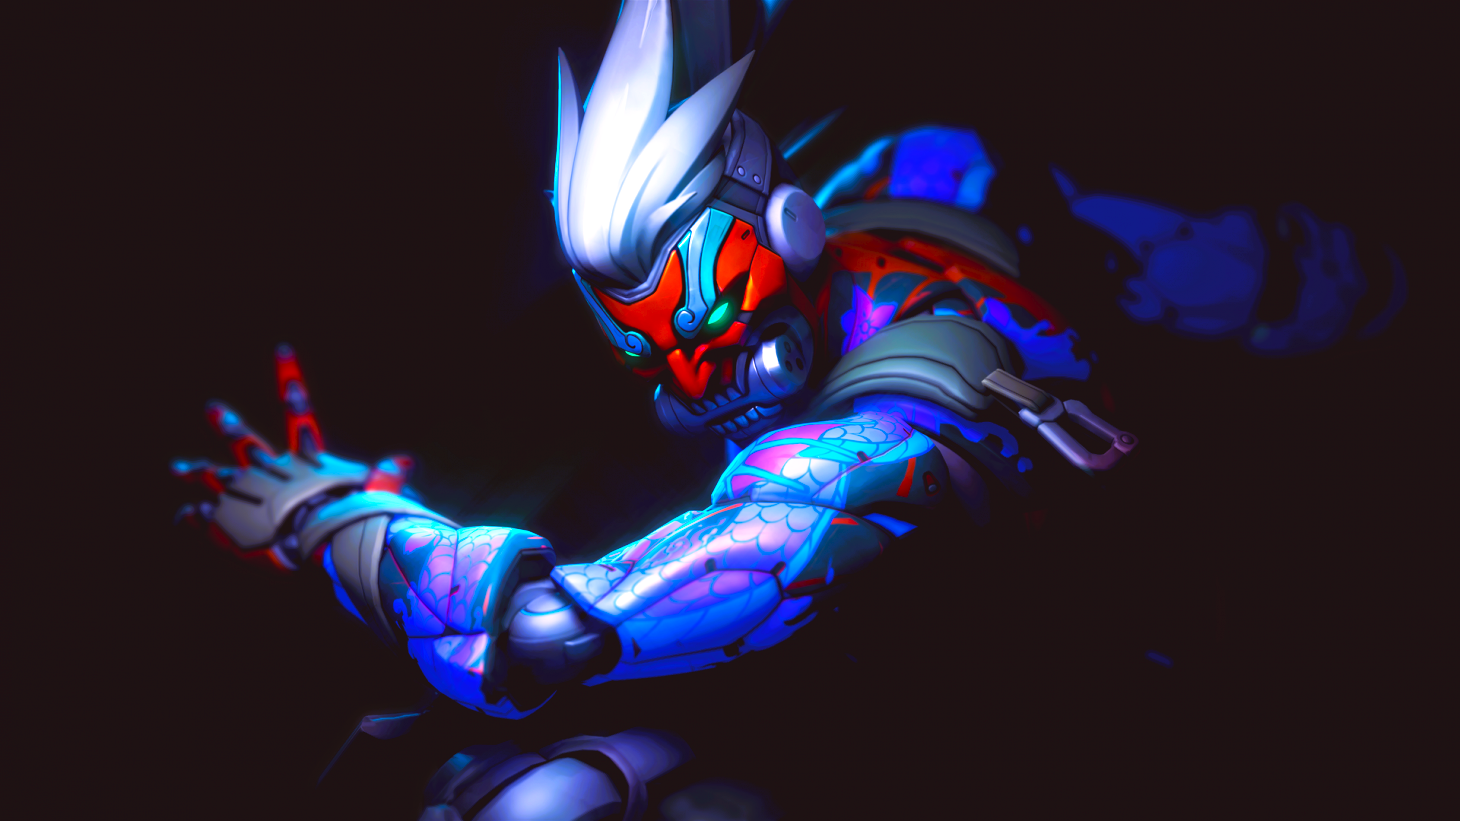 Genji's Cyber Demon mythic skin in Overwatch 2